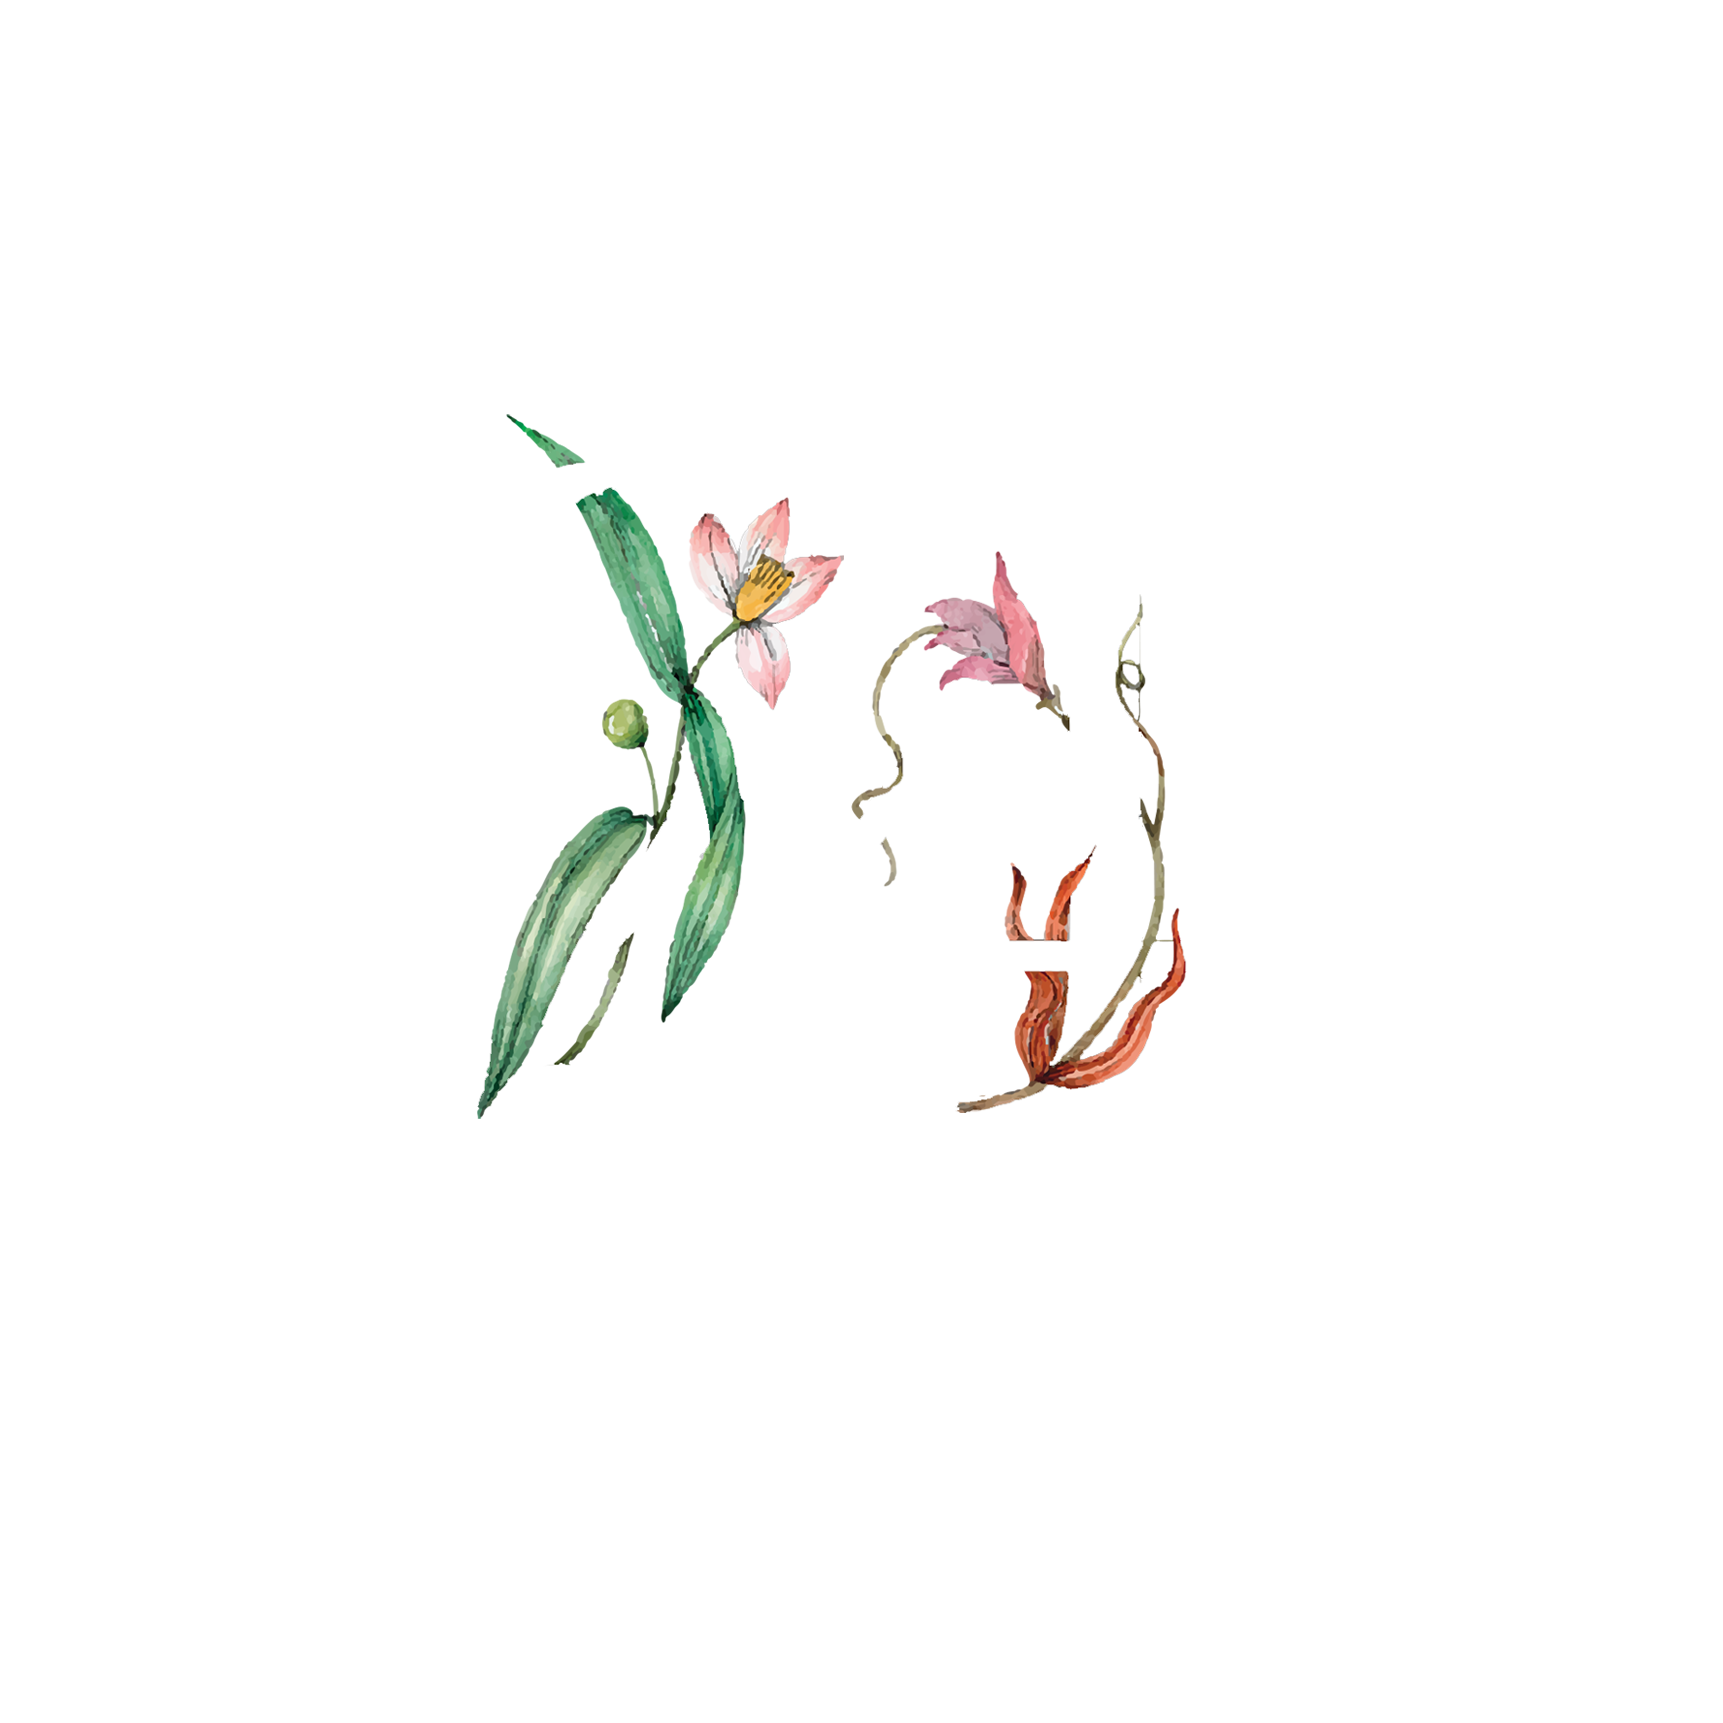 Click to read Day 24 - Non-Judgement